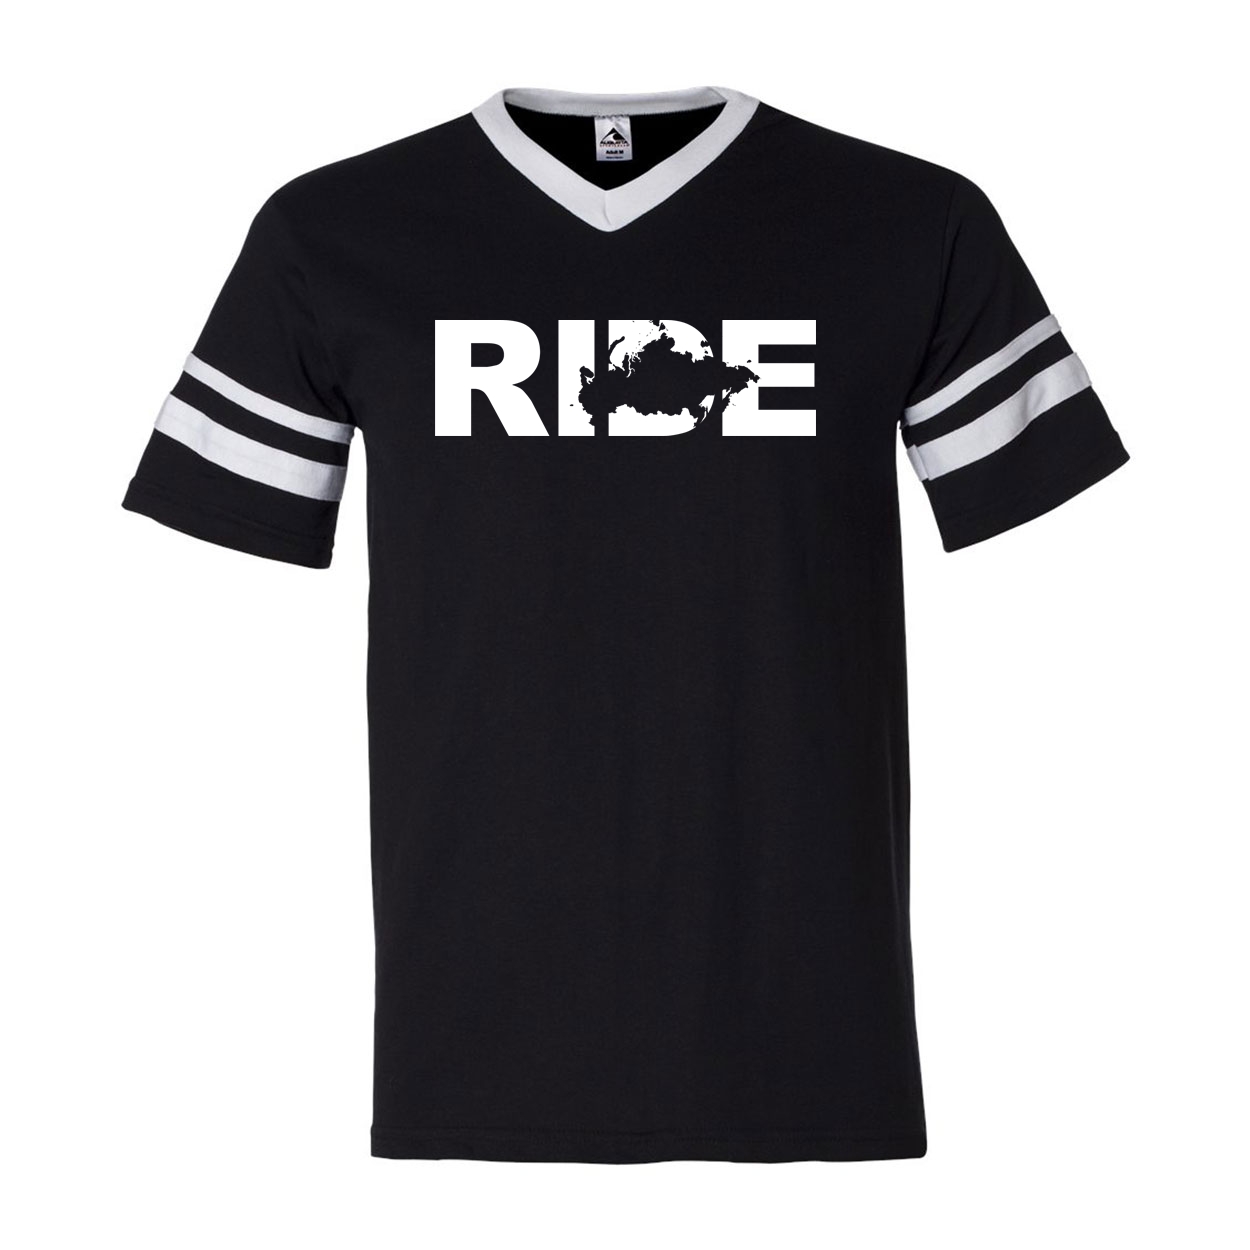 Ride Russia Classic Premium Striped Jersey T-Shirt Black/White (White Logo)